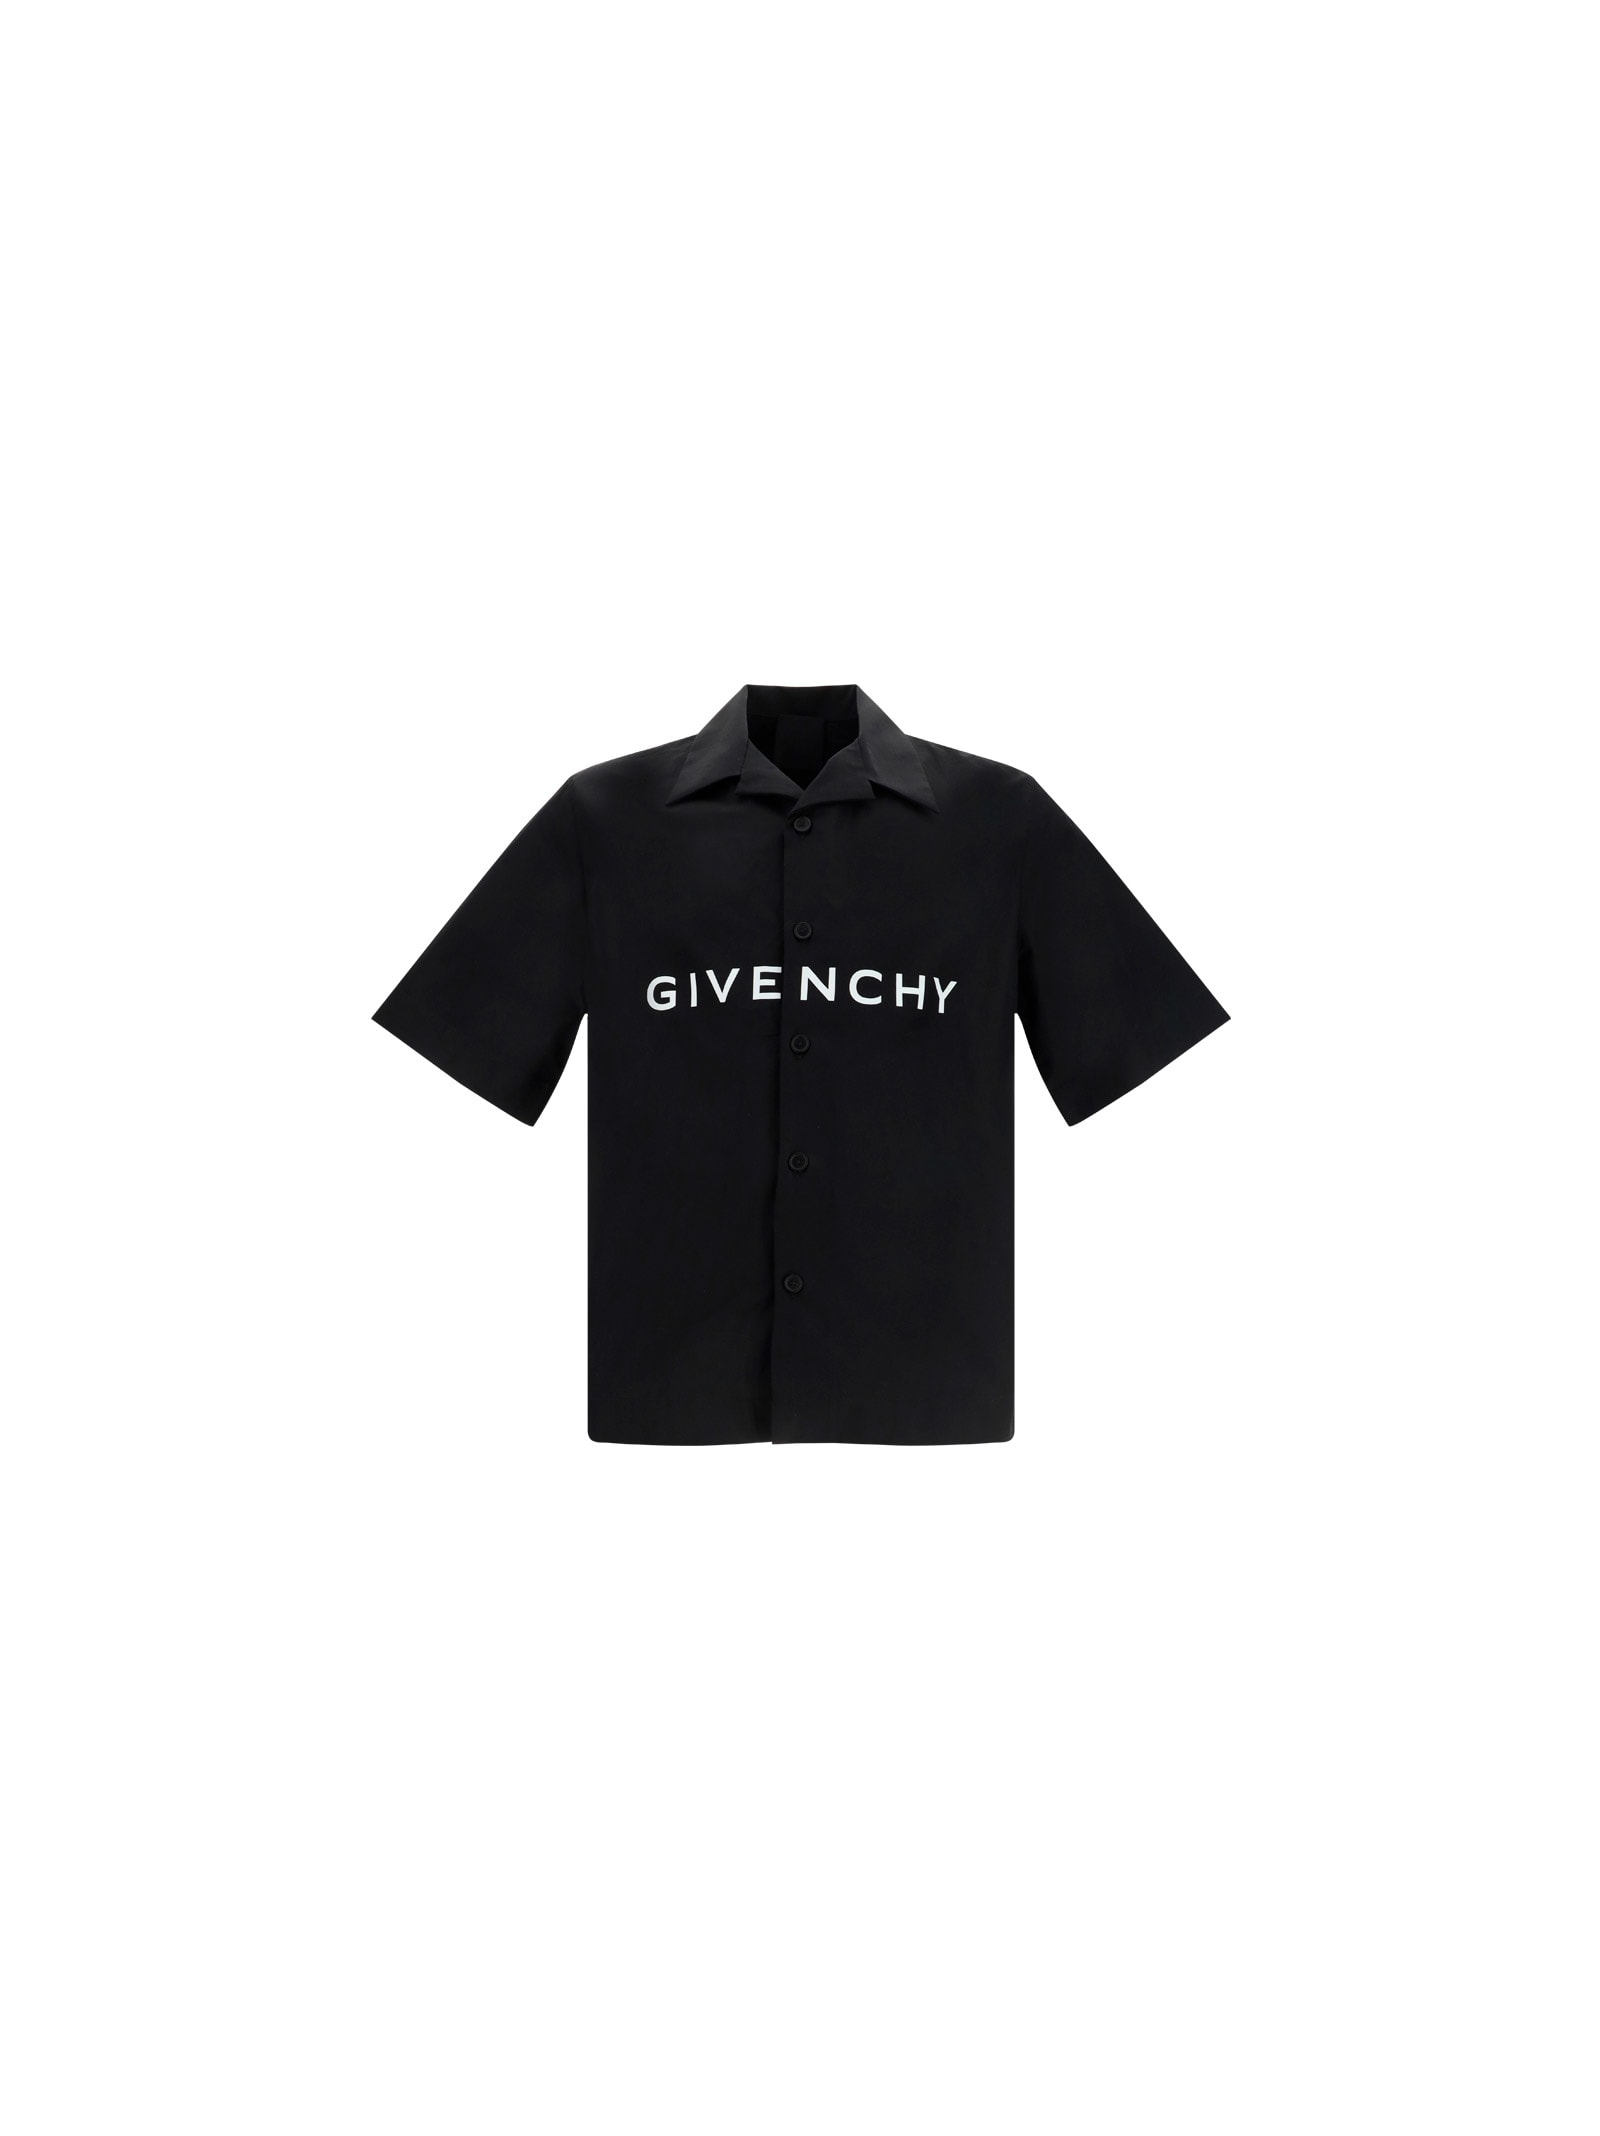 Givenchy Boxy Shirt